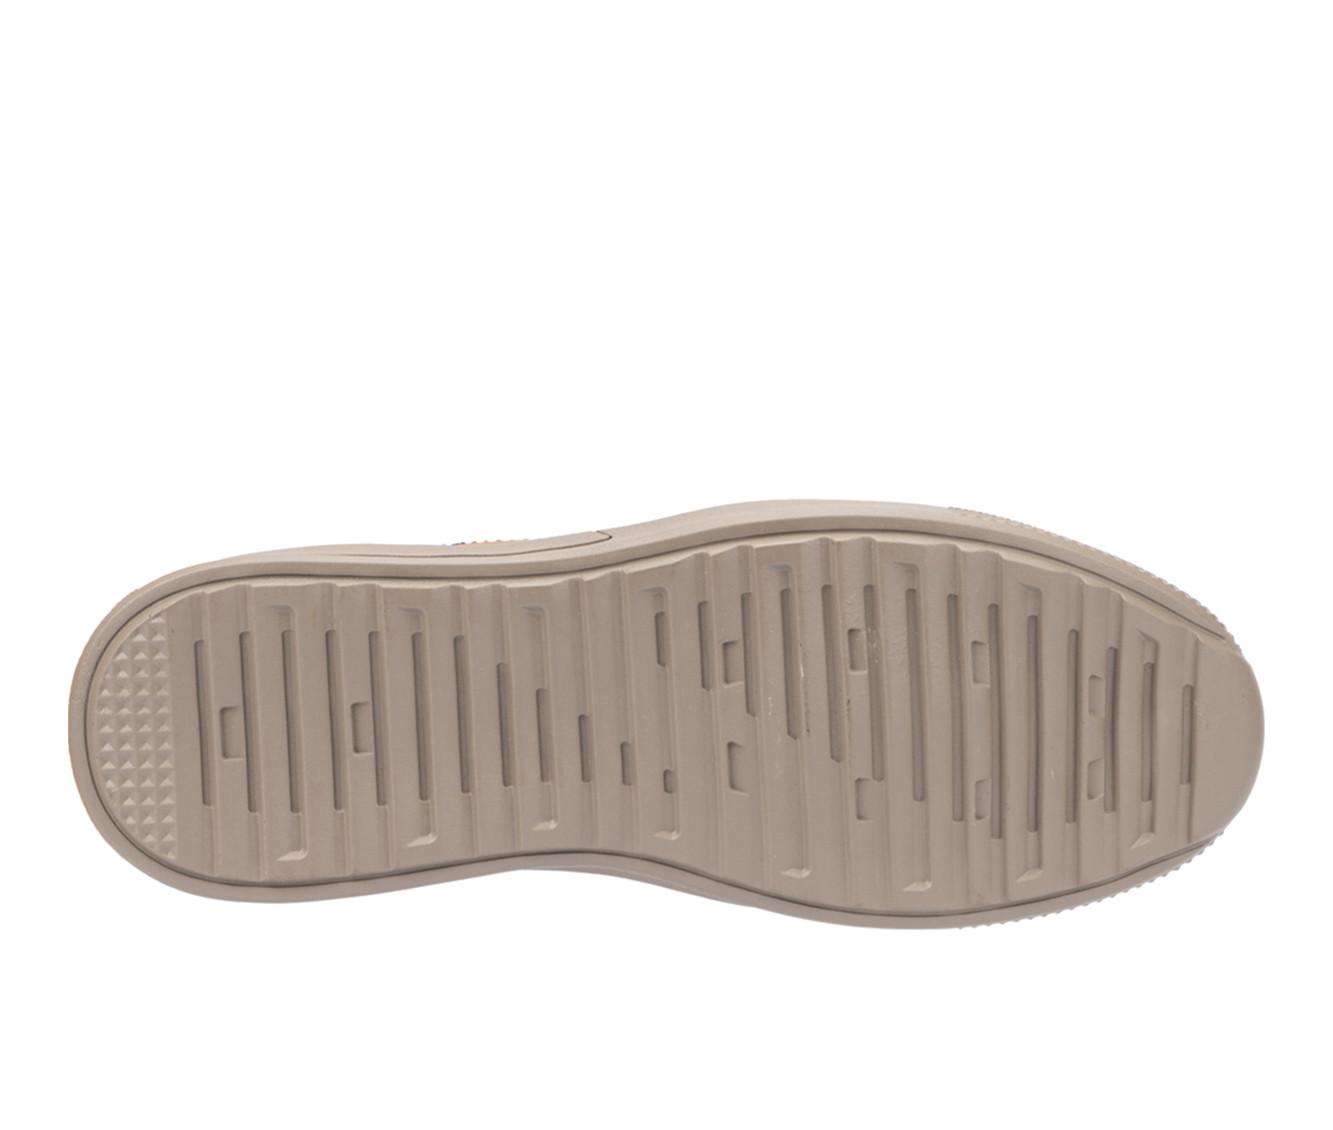 Men's Xray Footwear Duane Casual Loafers